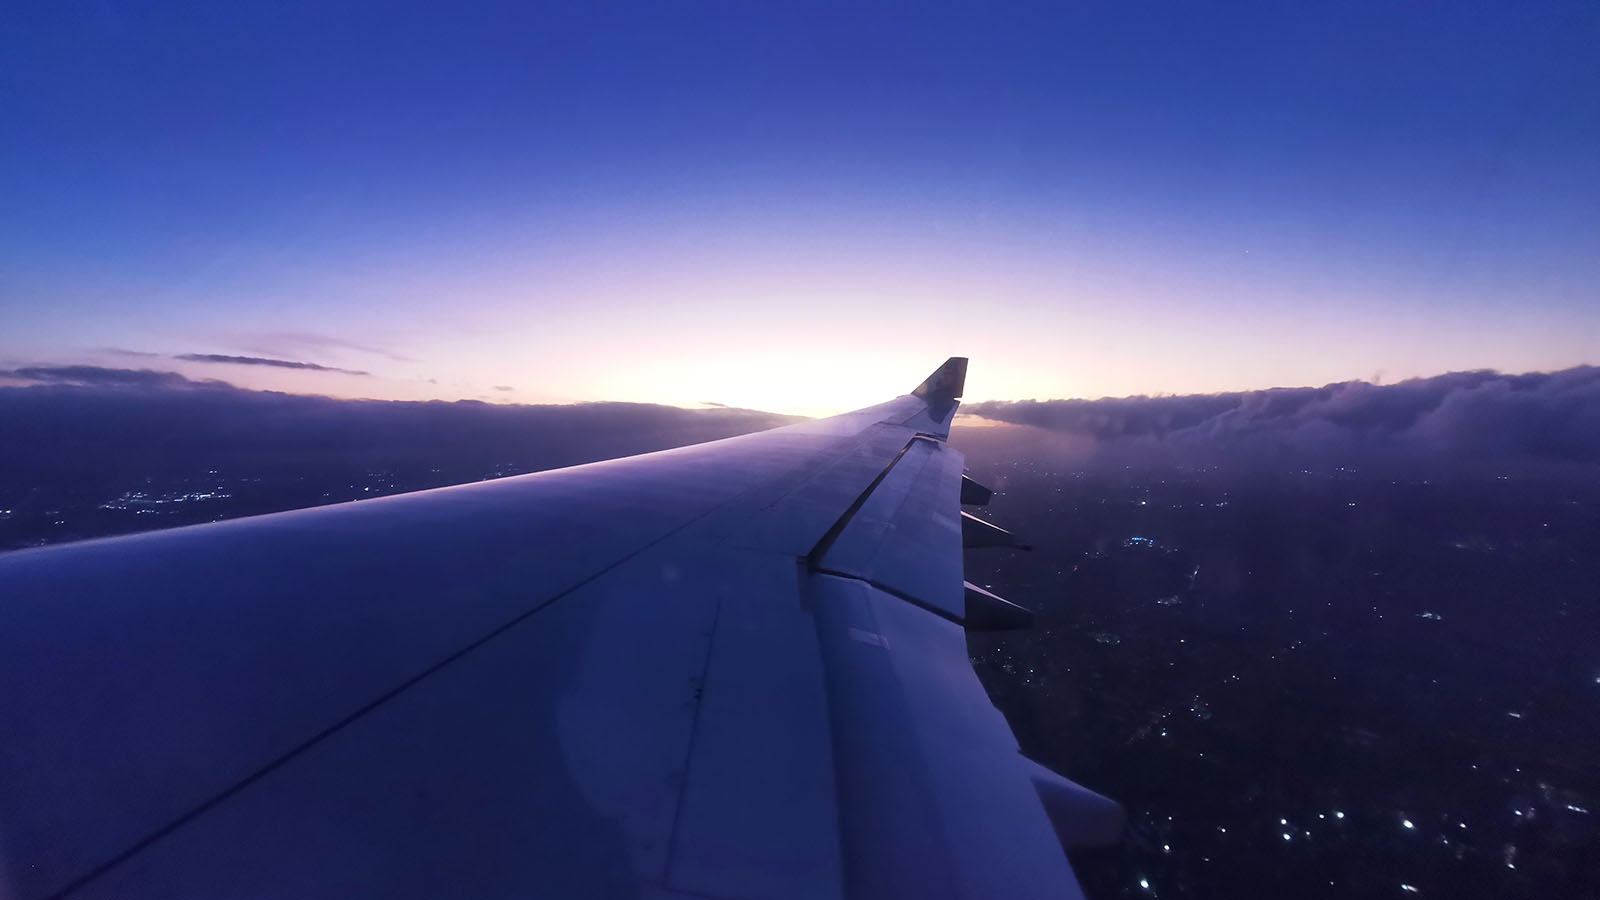 Sunset seen in Economy on Hawaiian Airlines